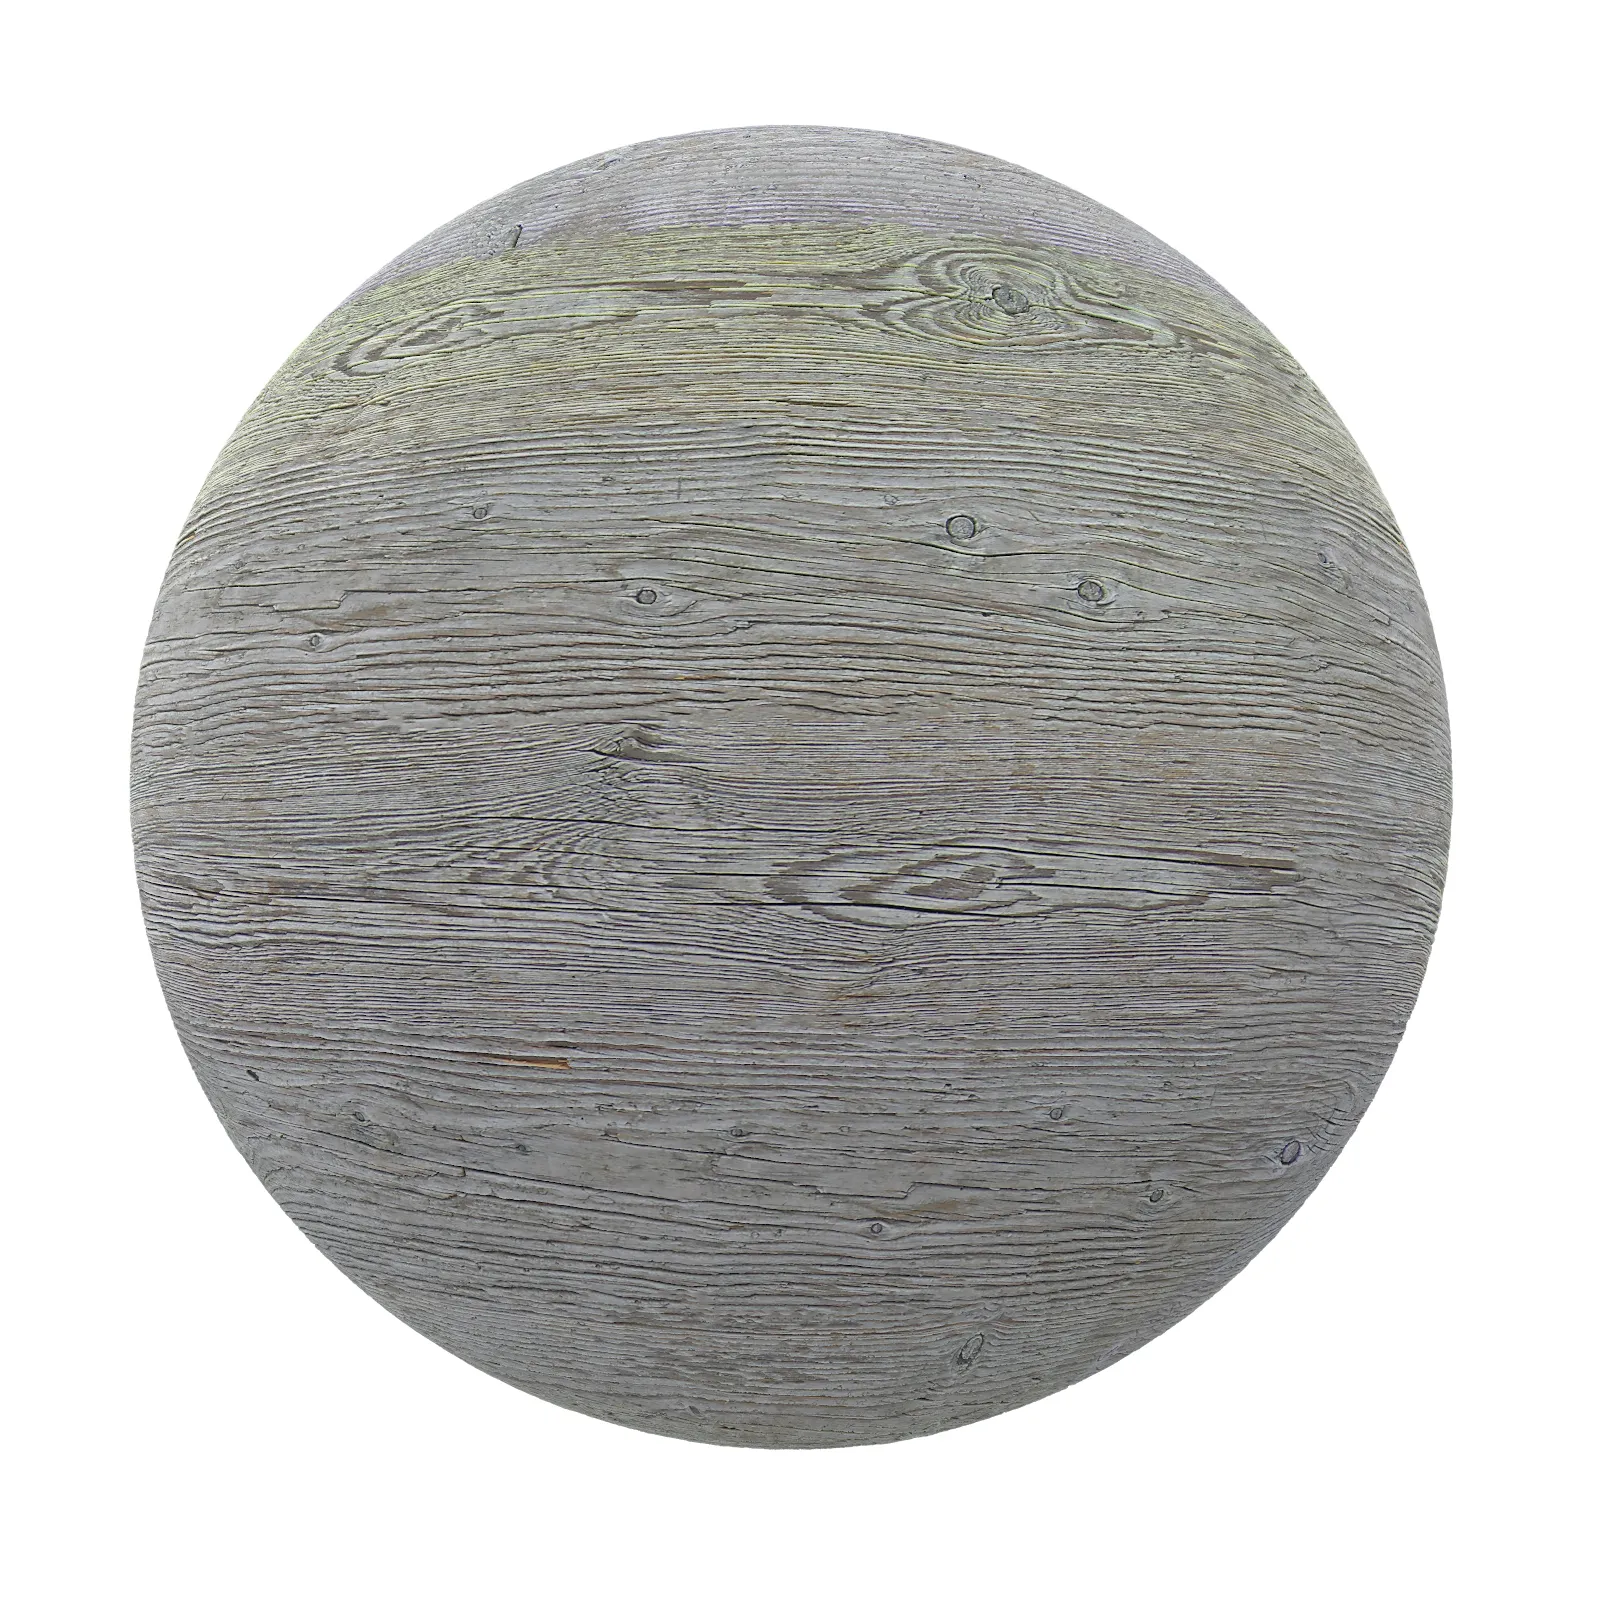 3ds Max Files – Texture – 8 – Wood Texture – 110 – Wood Texture by Minh Nguyen